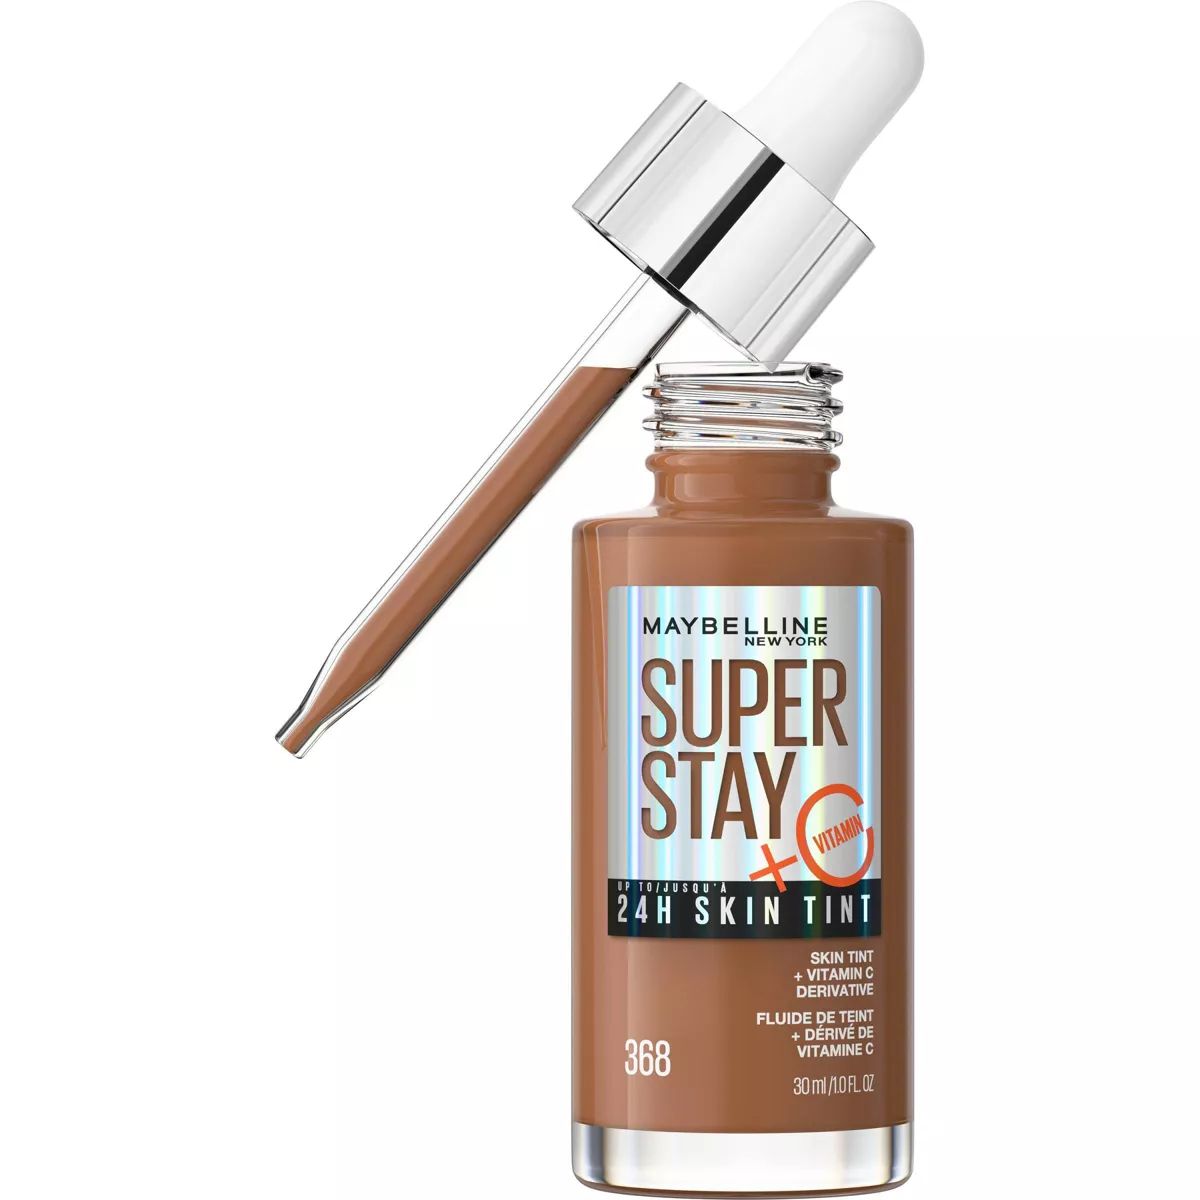 Maybelline Super Stay 24HR Skin Tint Foundation Serum with Vitamin C - 368- 1 fl oz | Target